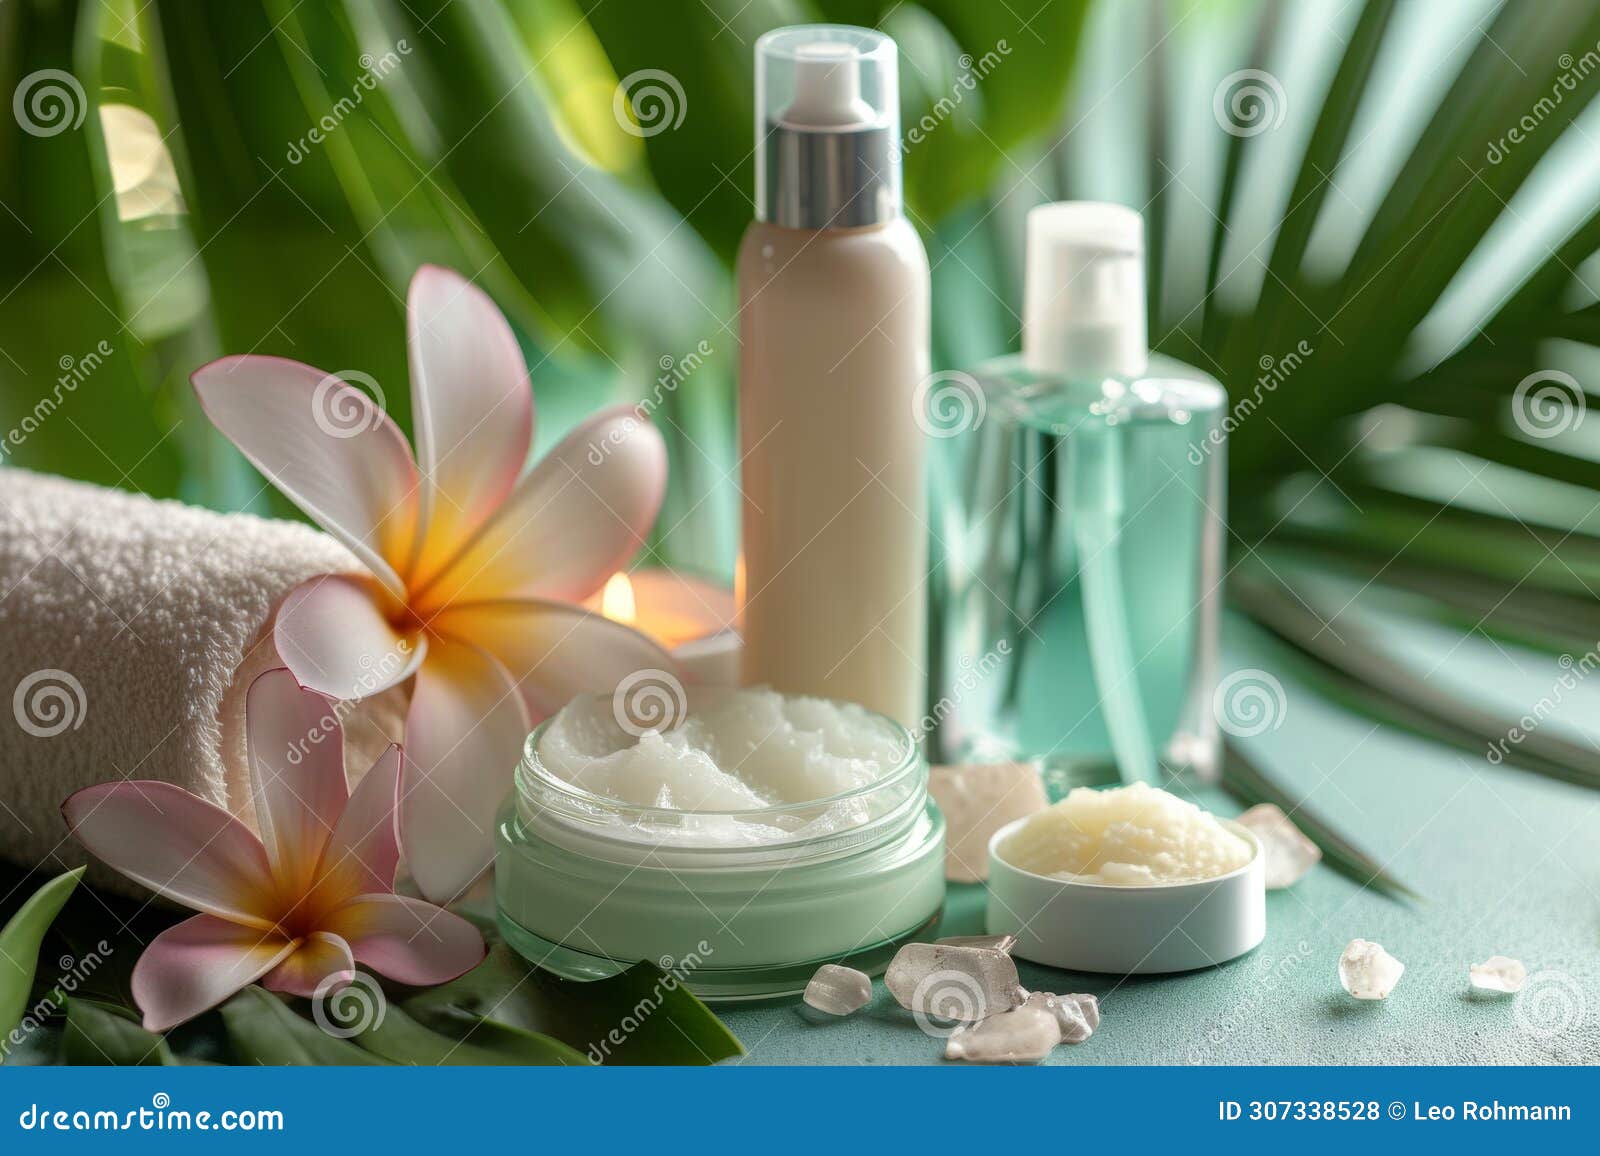 anti aging glowing skin treatmentrejuvenating toner oil. skincare age resistancehydrating soap oil. cream lifted elastin balm